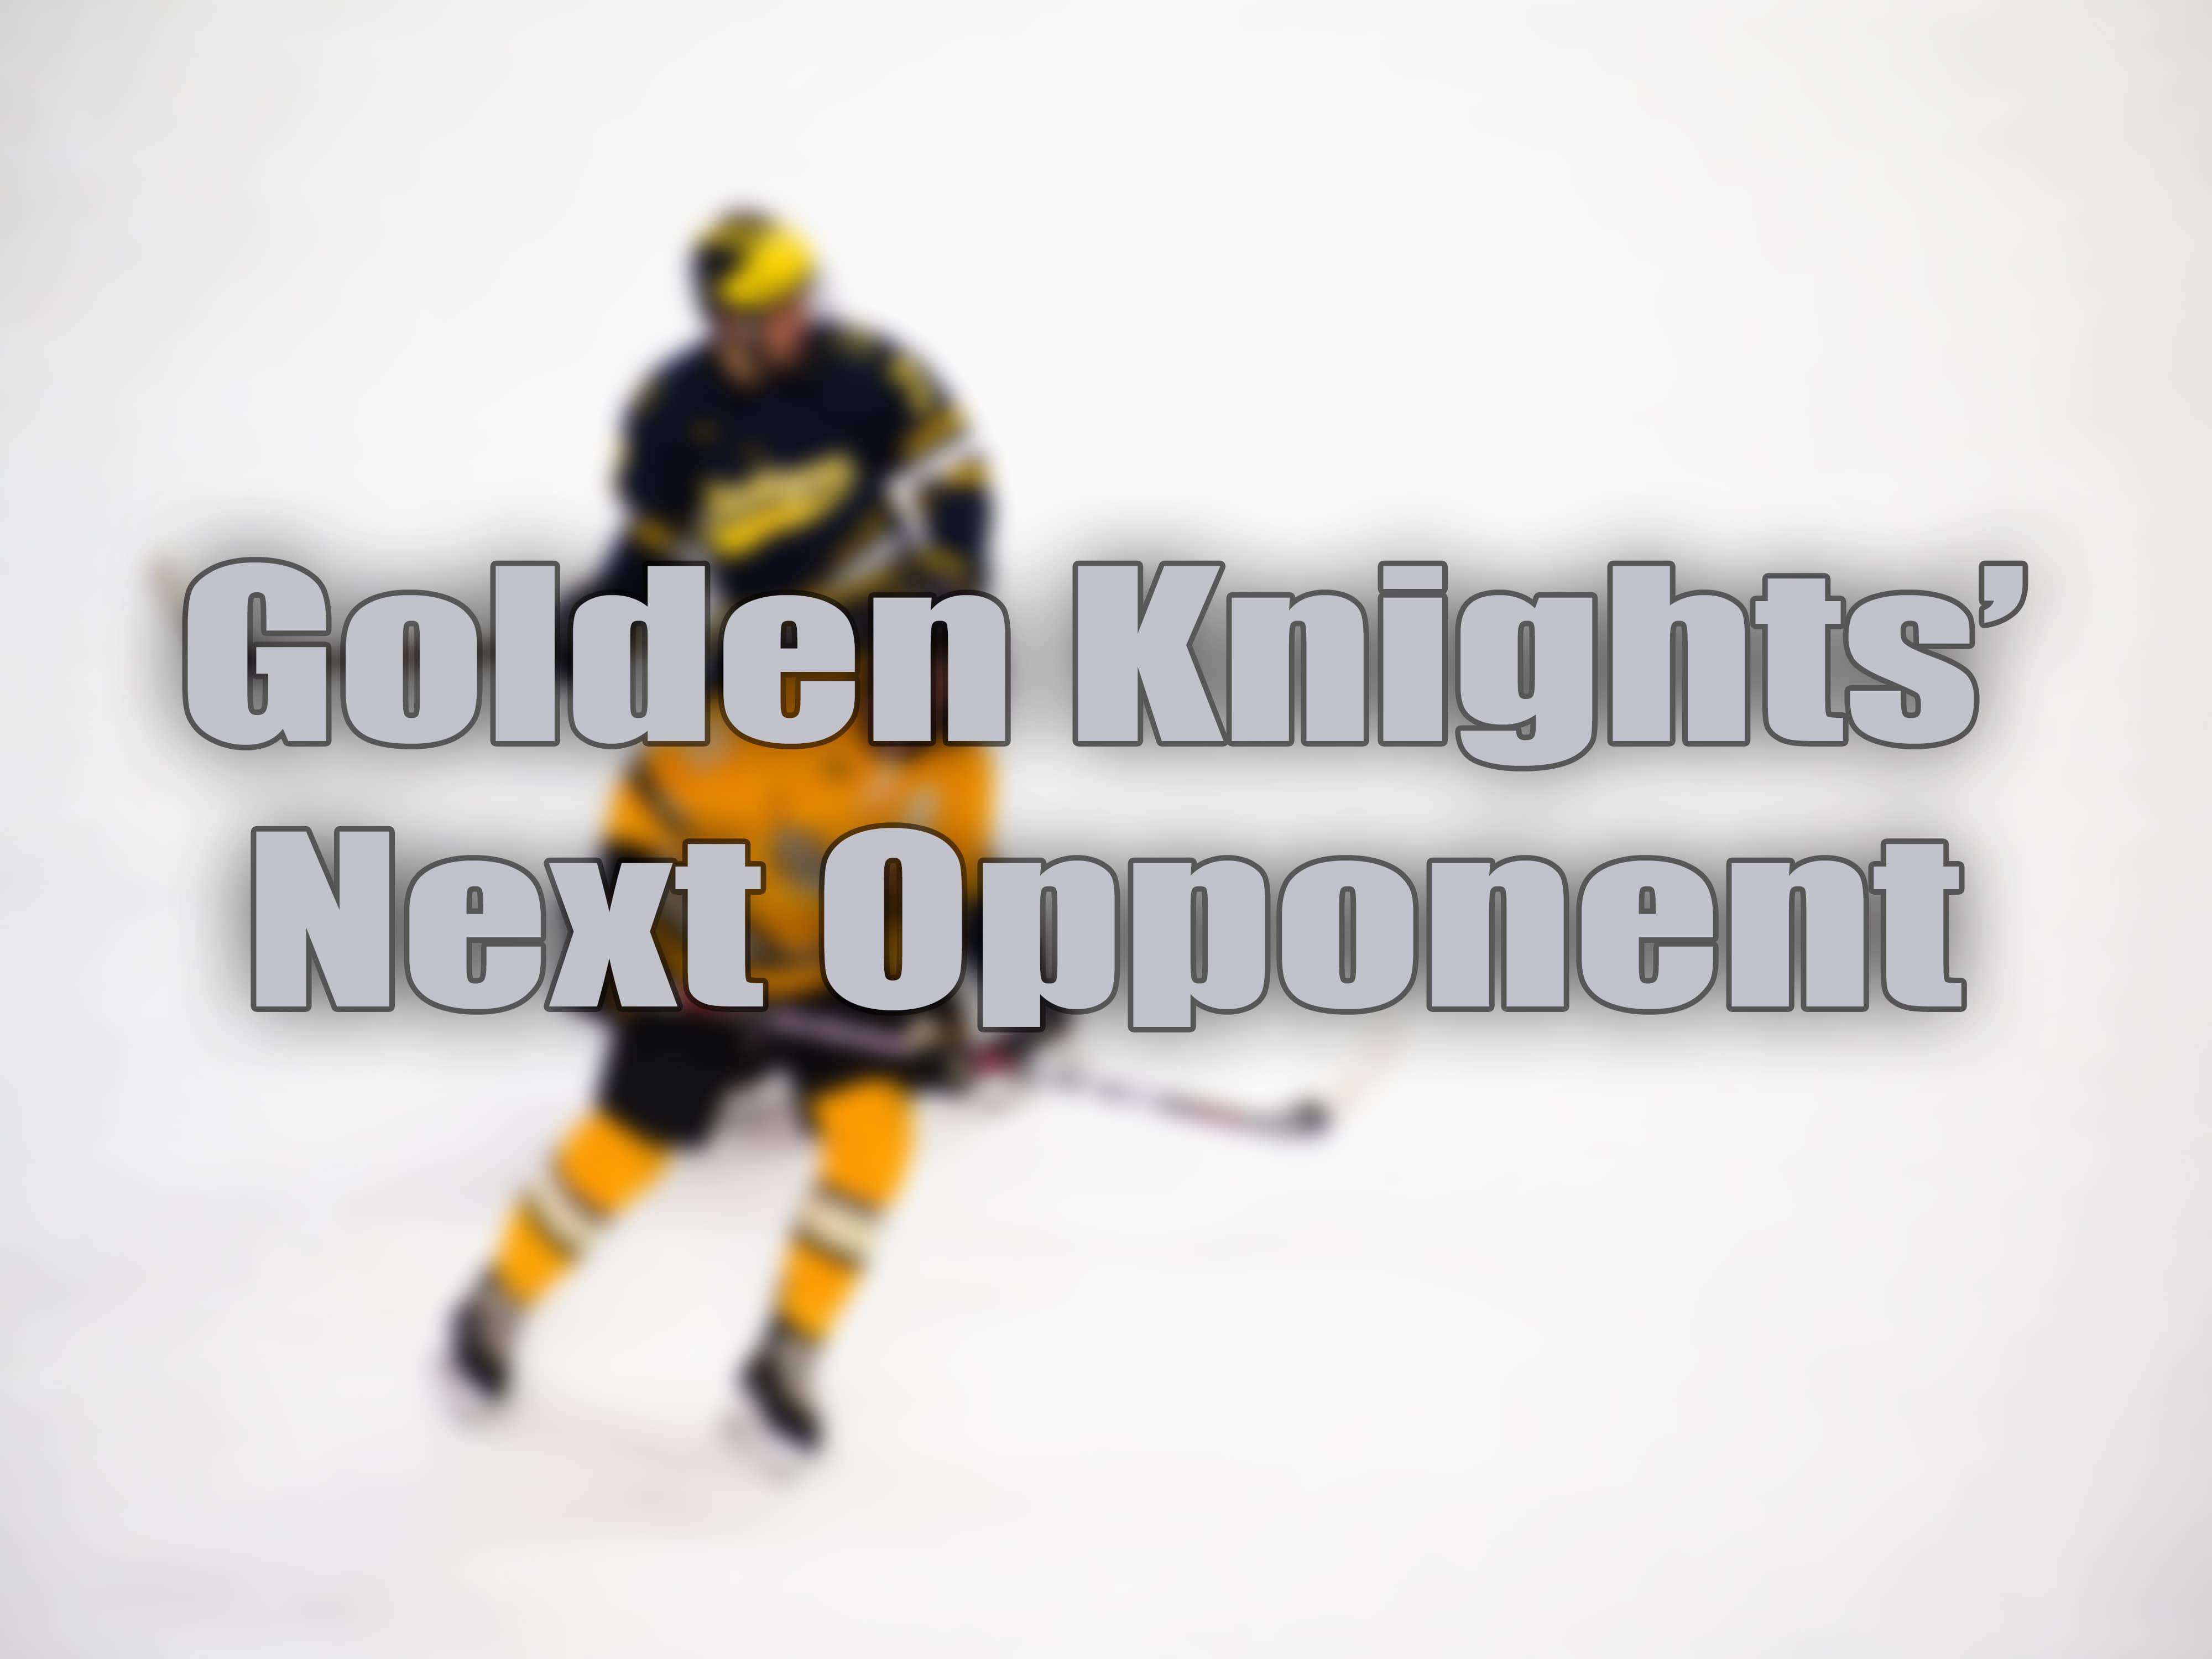 Golden Knights' Opponent.jpg